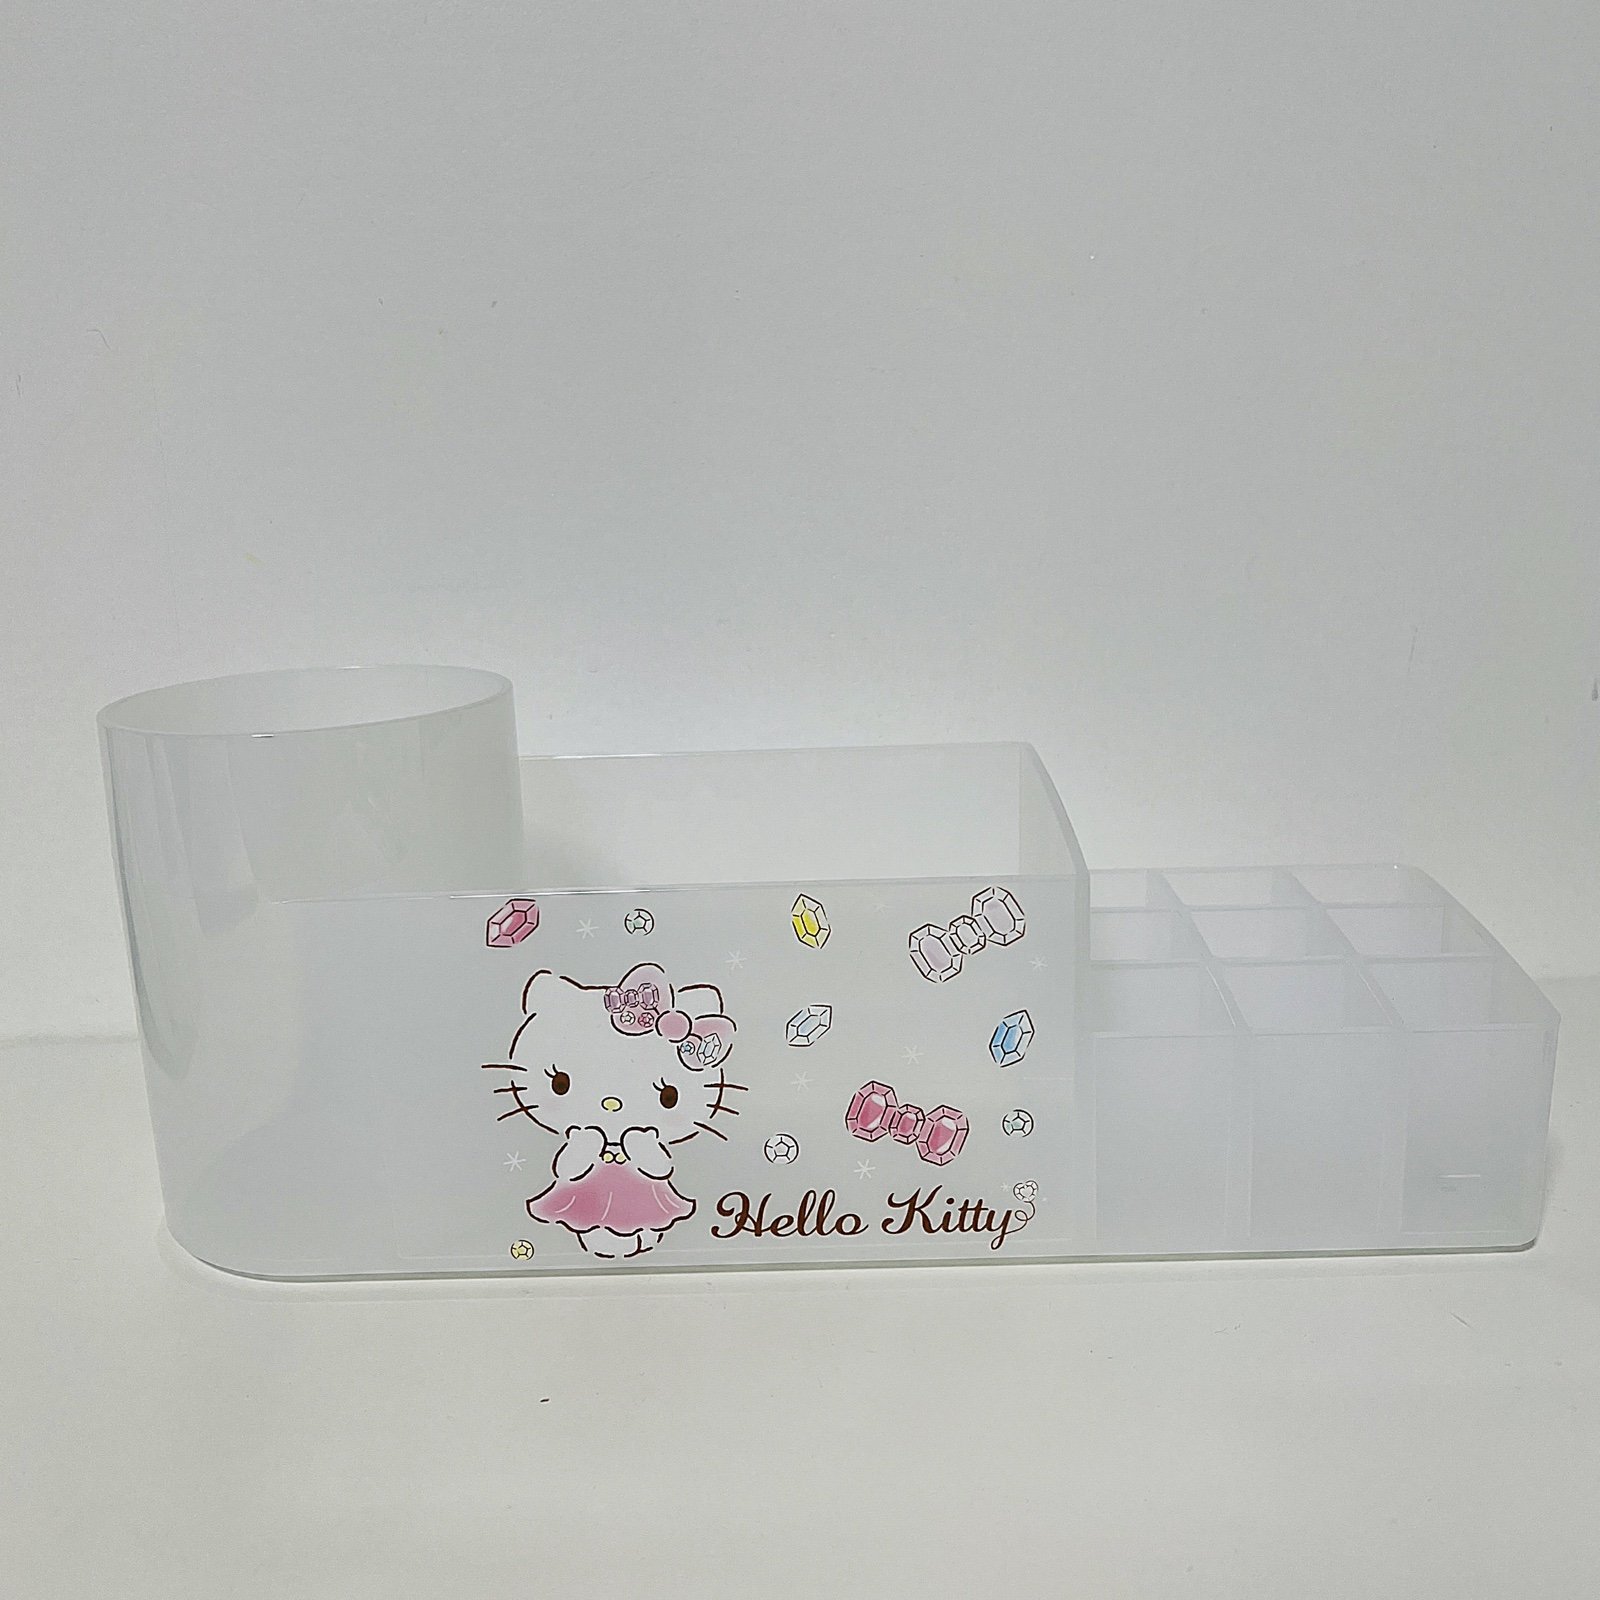 Sanrio Hello Kitty cosmetics storage box/ organizer cqW